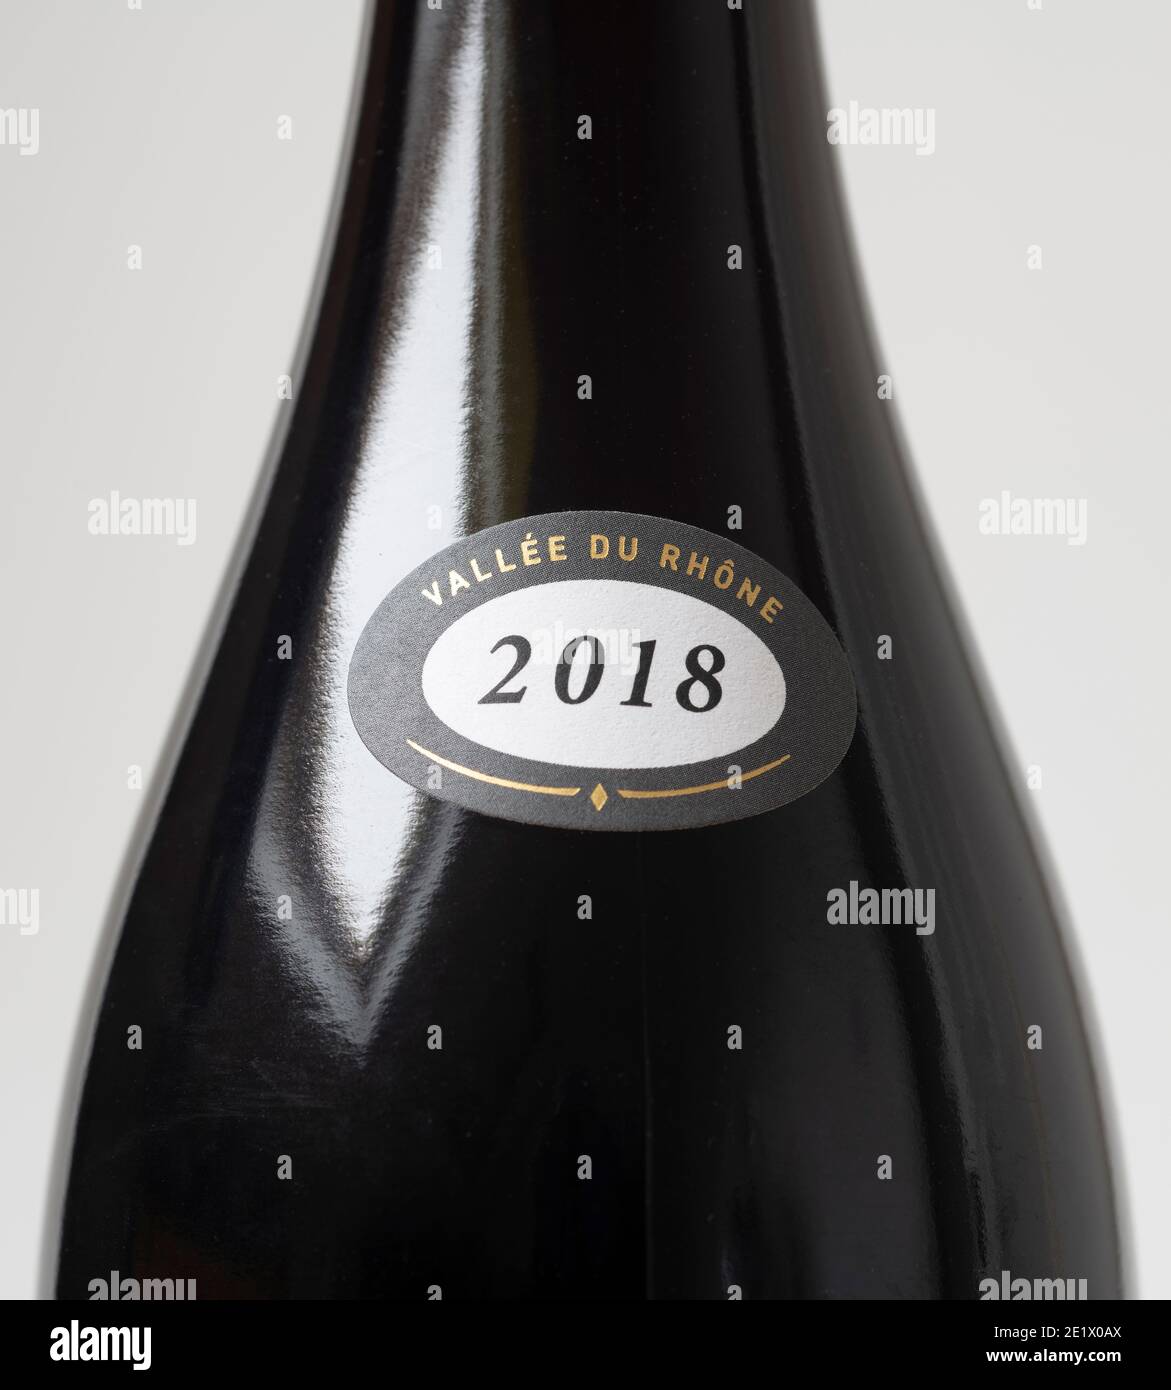 Vallée du Rhône 2018 Crozes Hermitage French red wine bottle neck label Stock Photo